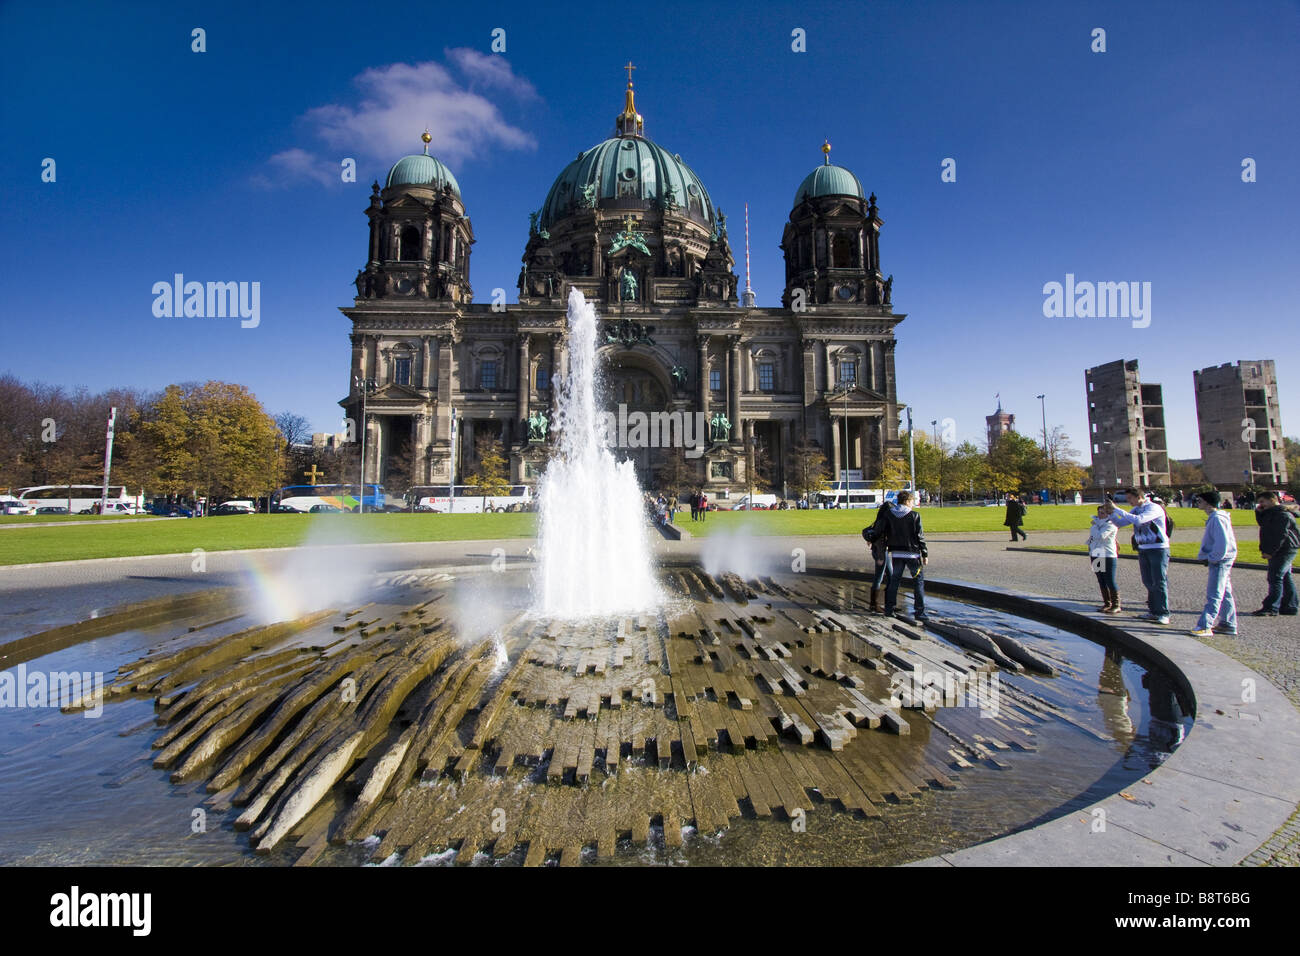 Berliner Dom mit Fontain, Deutschland, Berlin Stockfoto